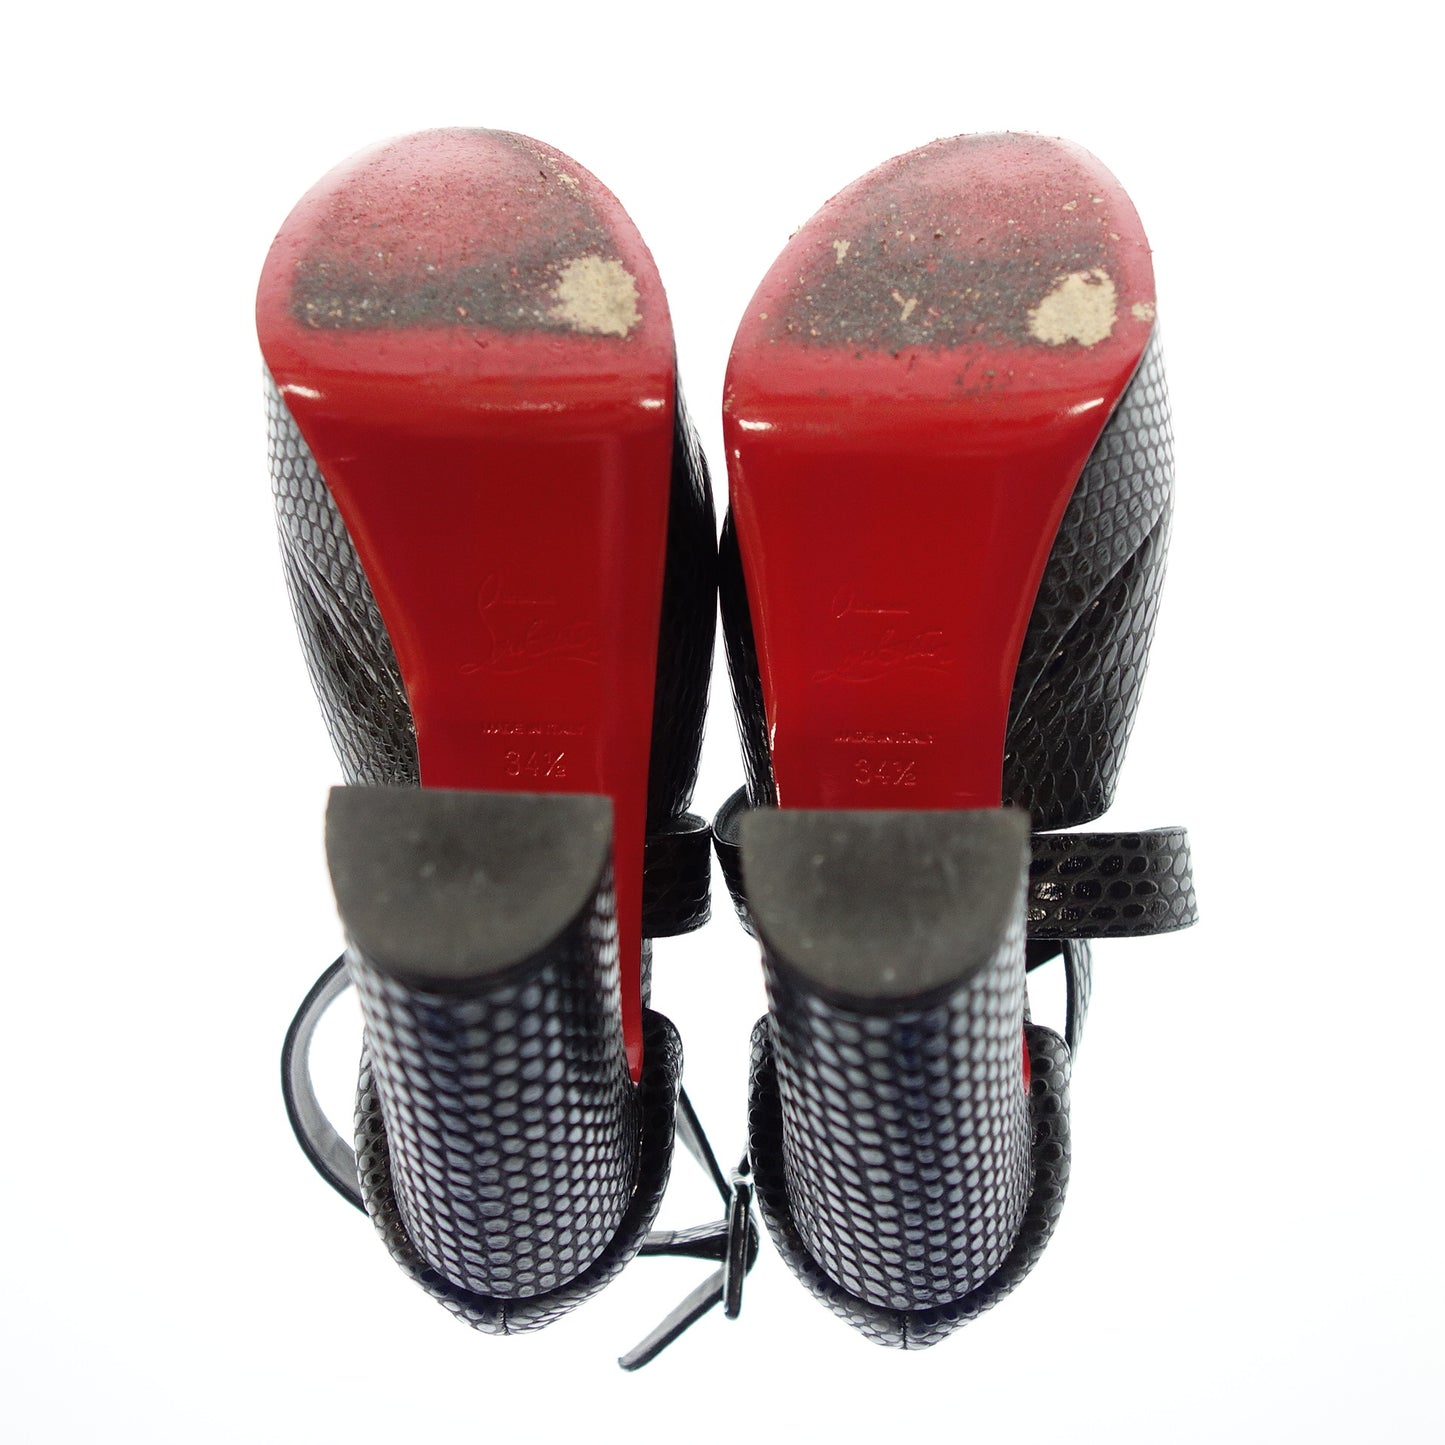 状况良好◆Christian Louboutin 压纹皮革凉鞋 女式 黑色 34.5 码 Christian Louboutin [AFD4] 